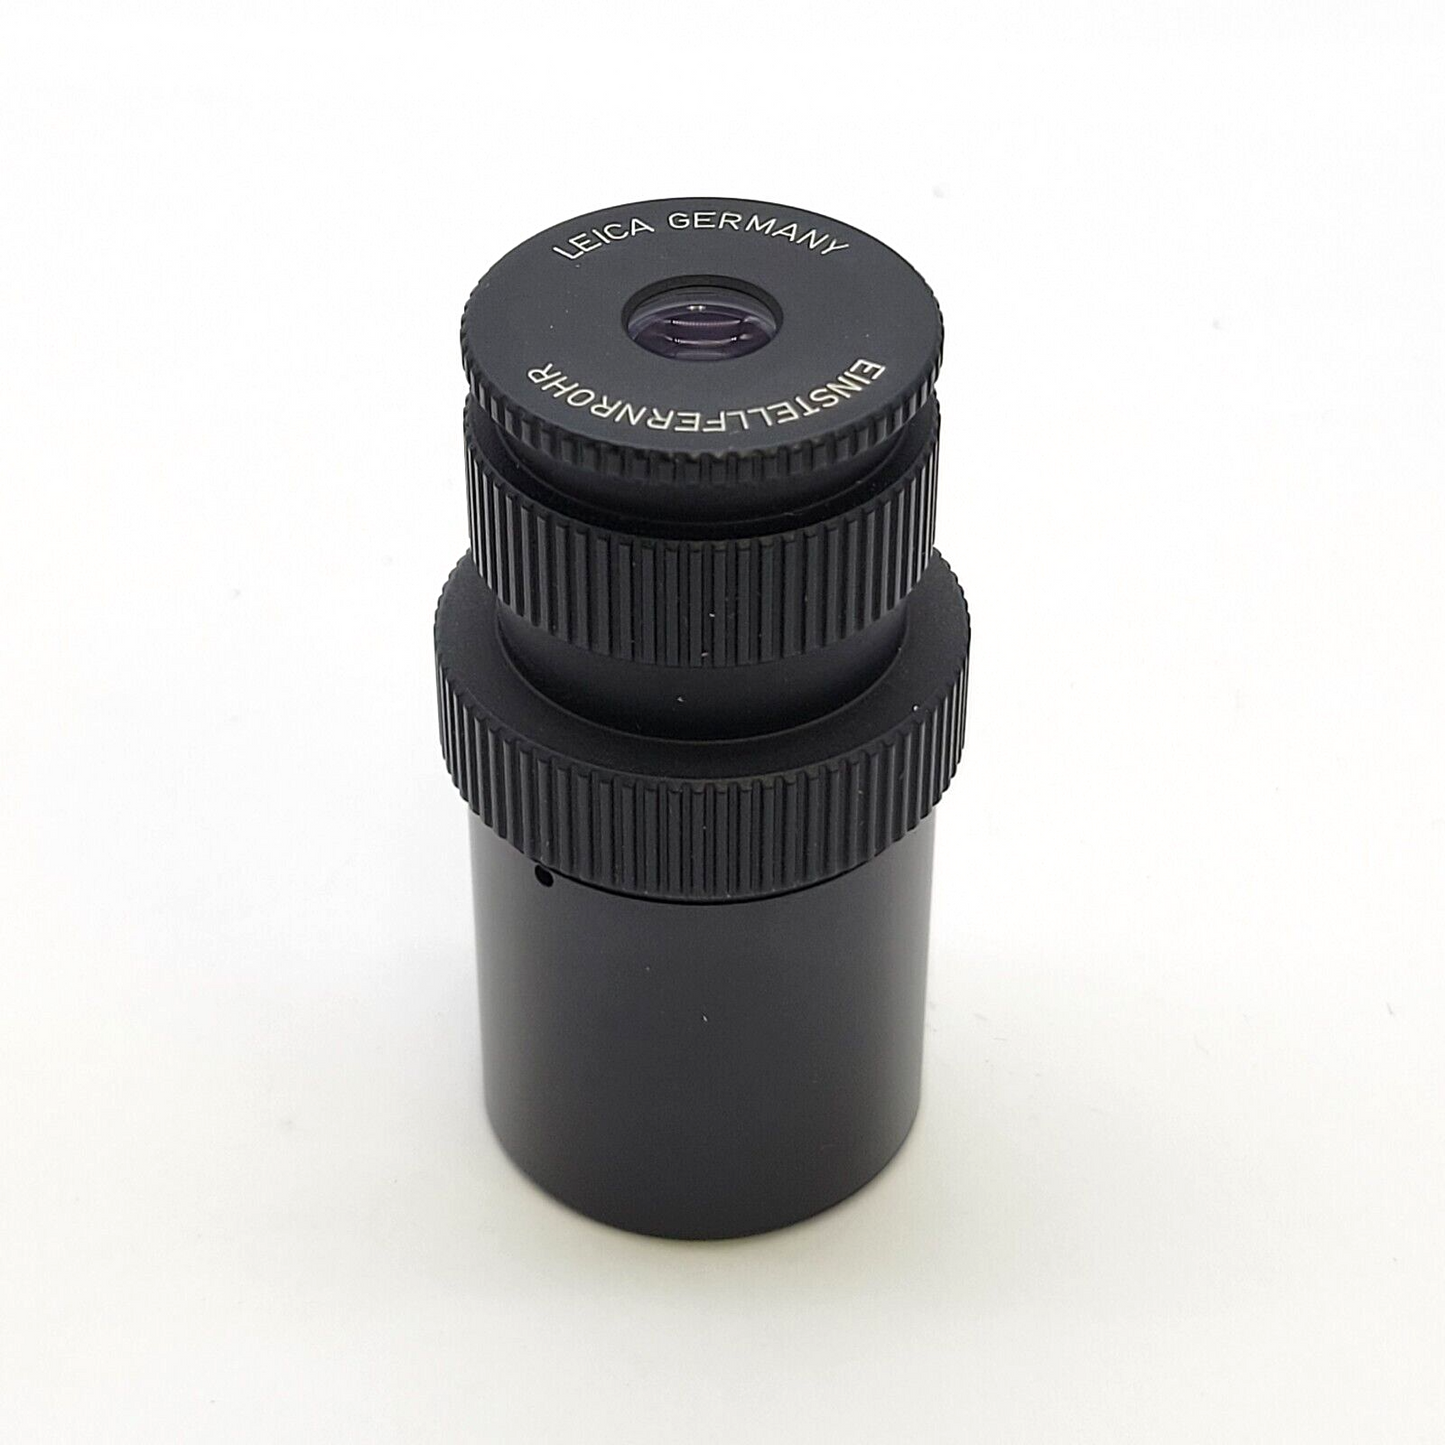 Leica Microscope Focusing Centering Telescope Phase & ICT 11505070 - microscopemarketplace